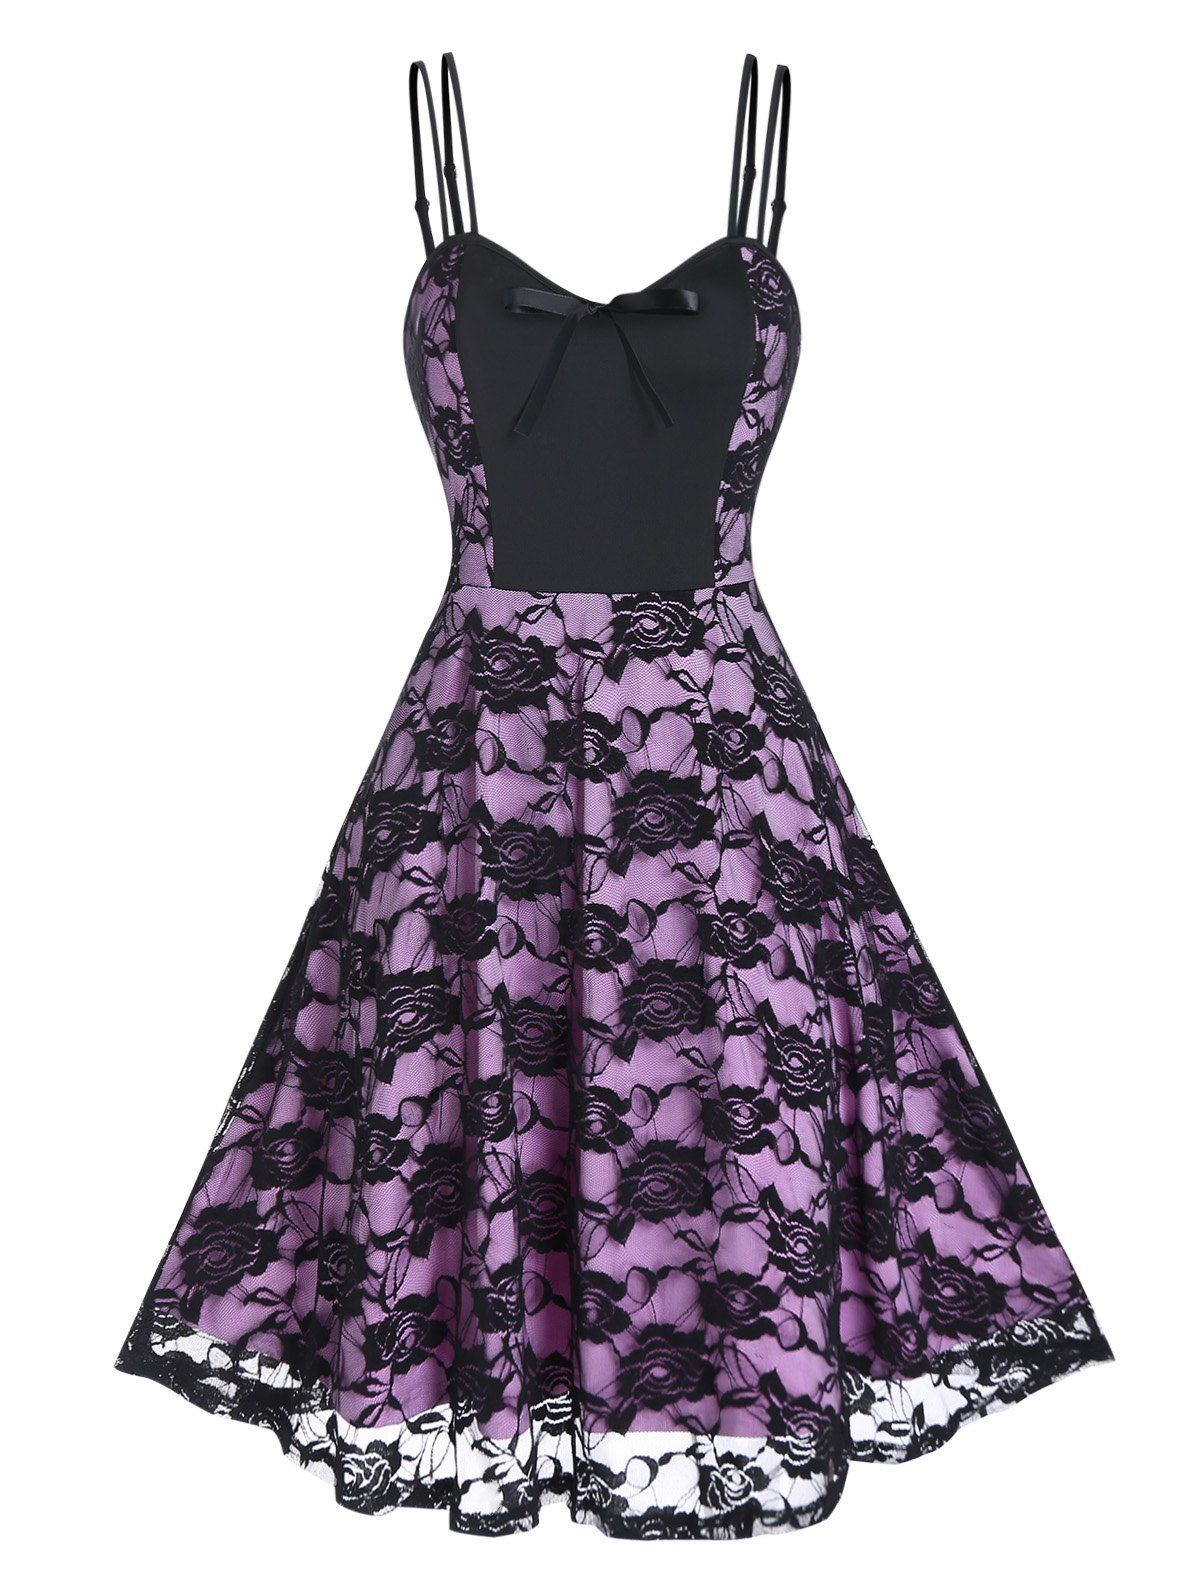 Casual Sundress Flower Lace Overlay Colorblock Bowknot Dual Strap High Waisted A Line Mini Dress - LIGHT PURPLE XXXL